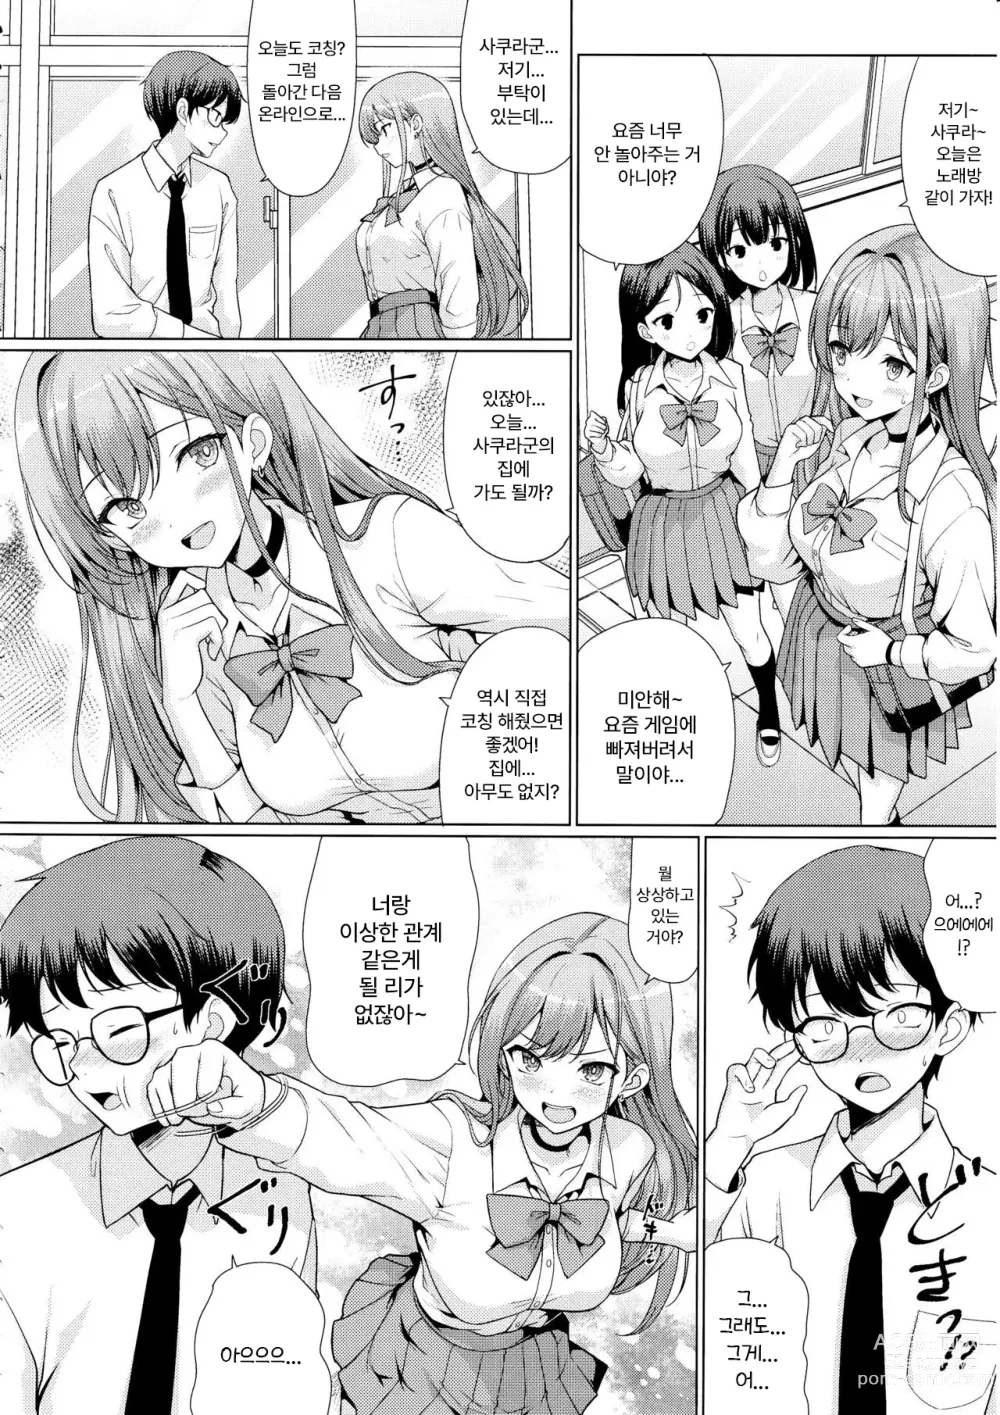 Page 7 of doujinshi 오타쿠에게 상냥한 갸루는 네토라레 당한다